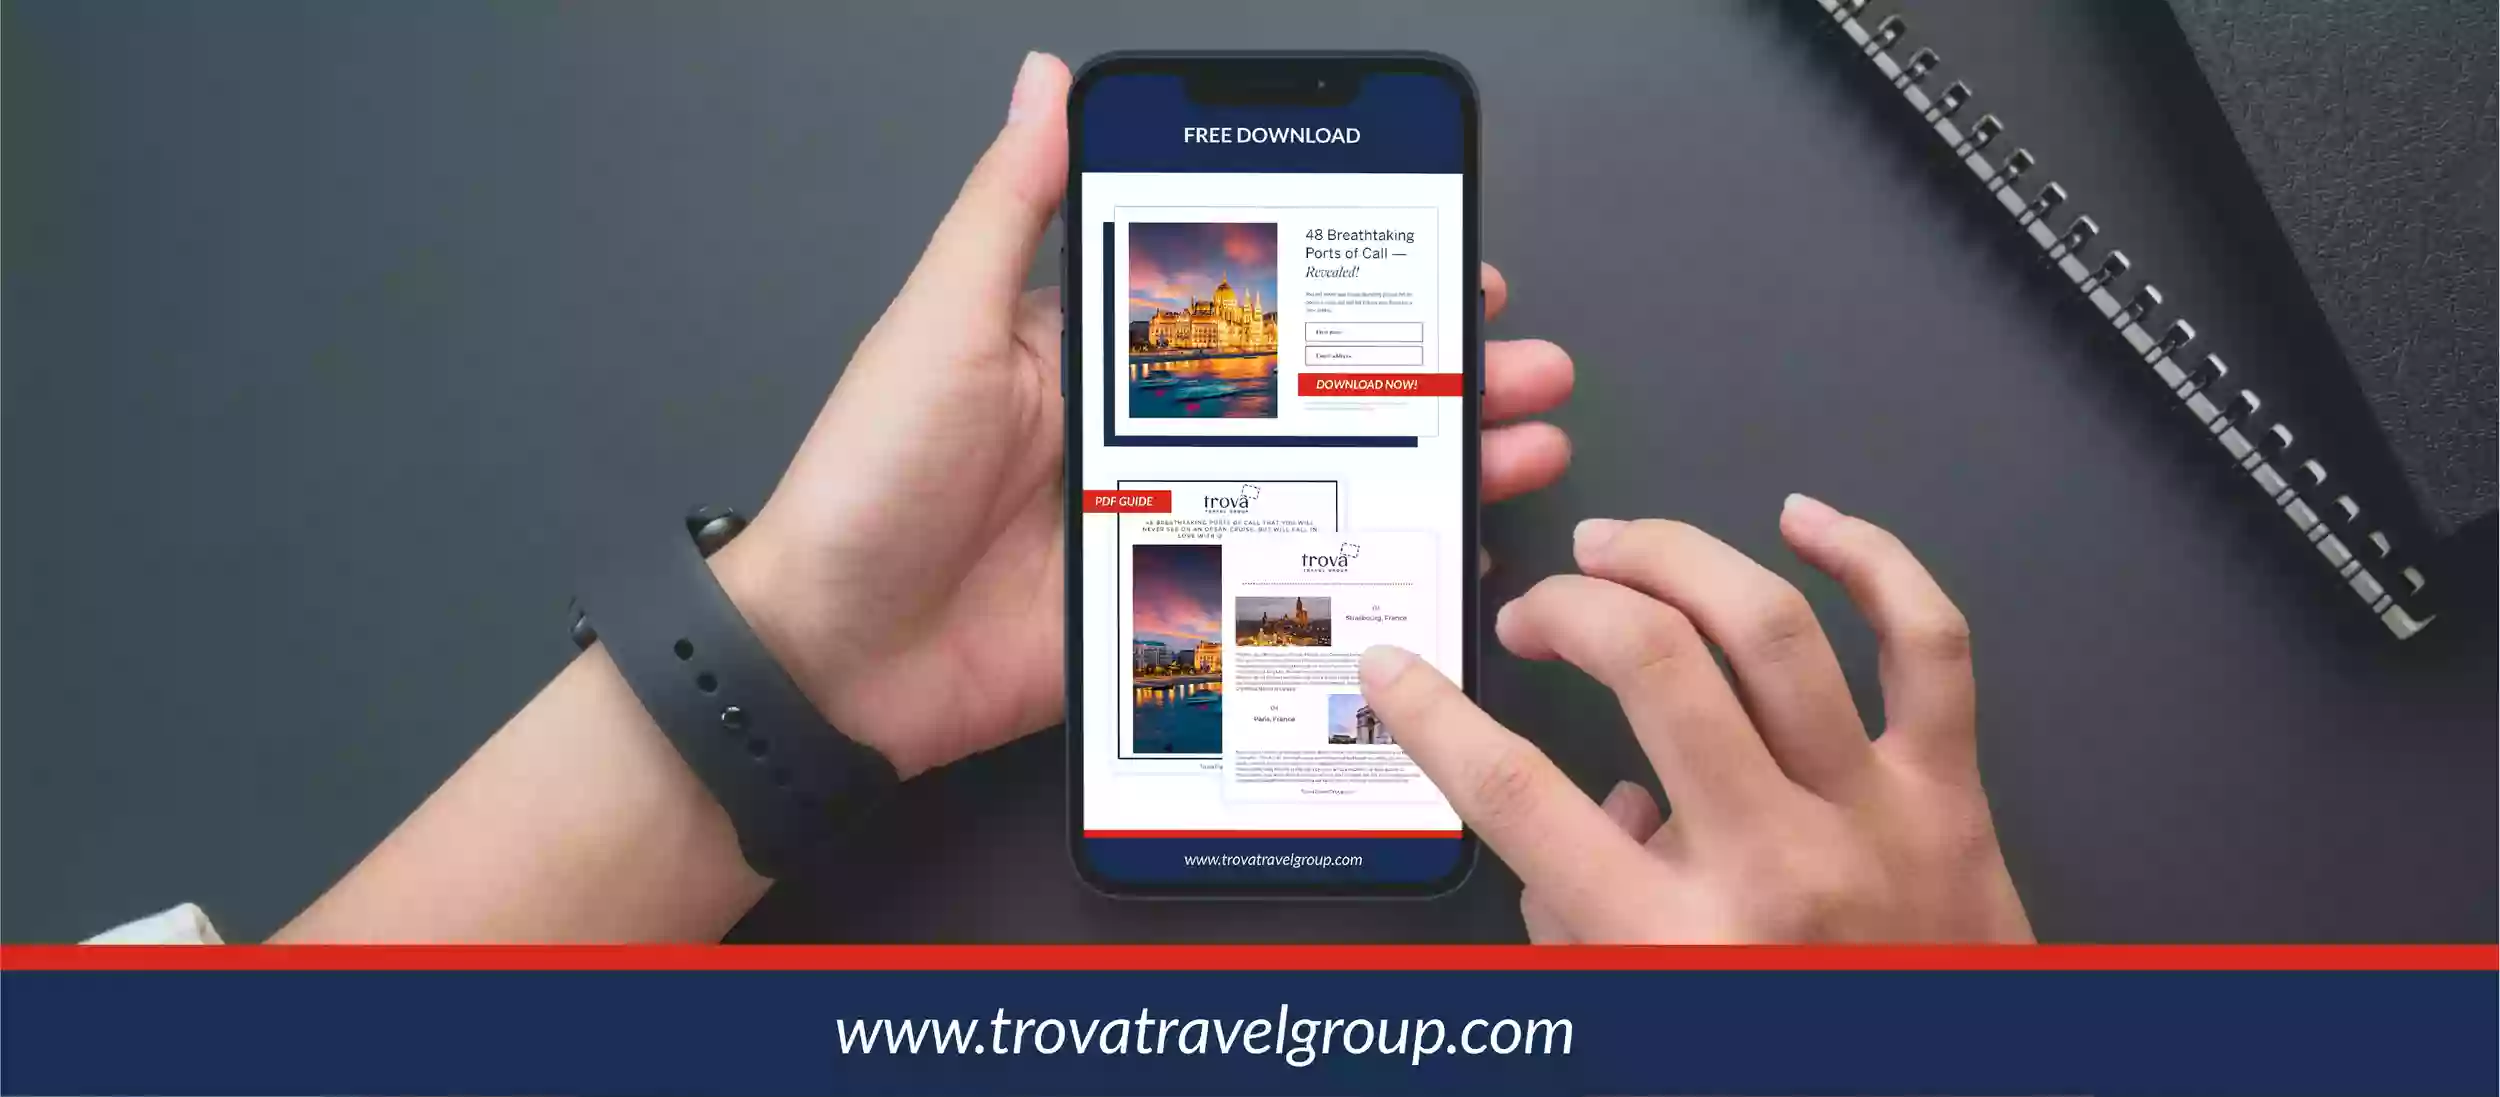 Trova Travel Group